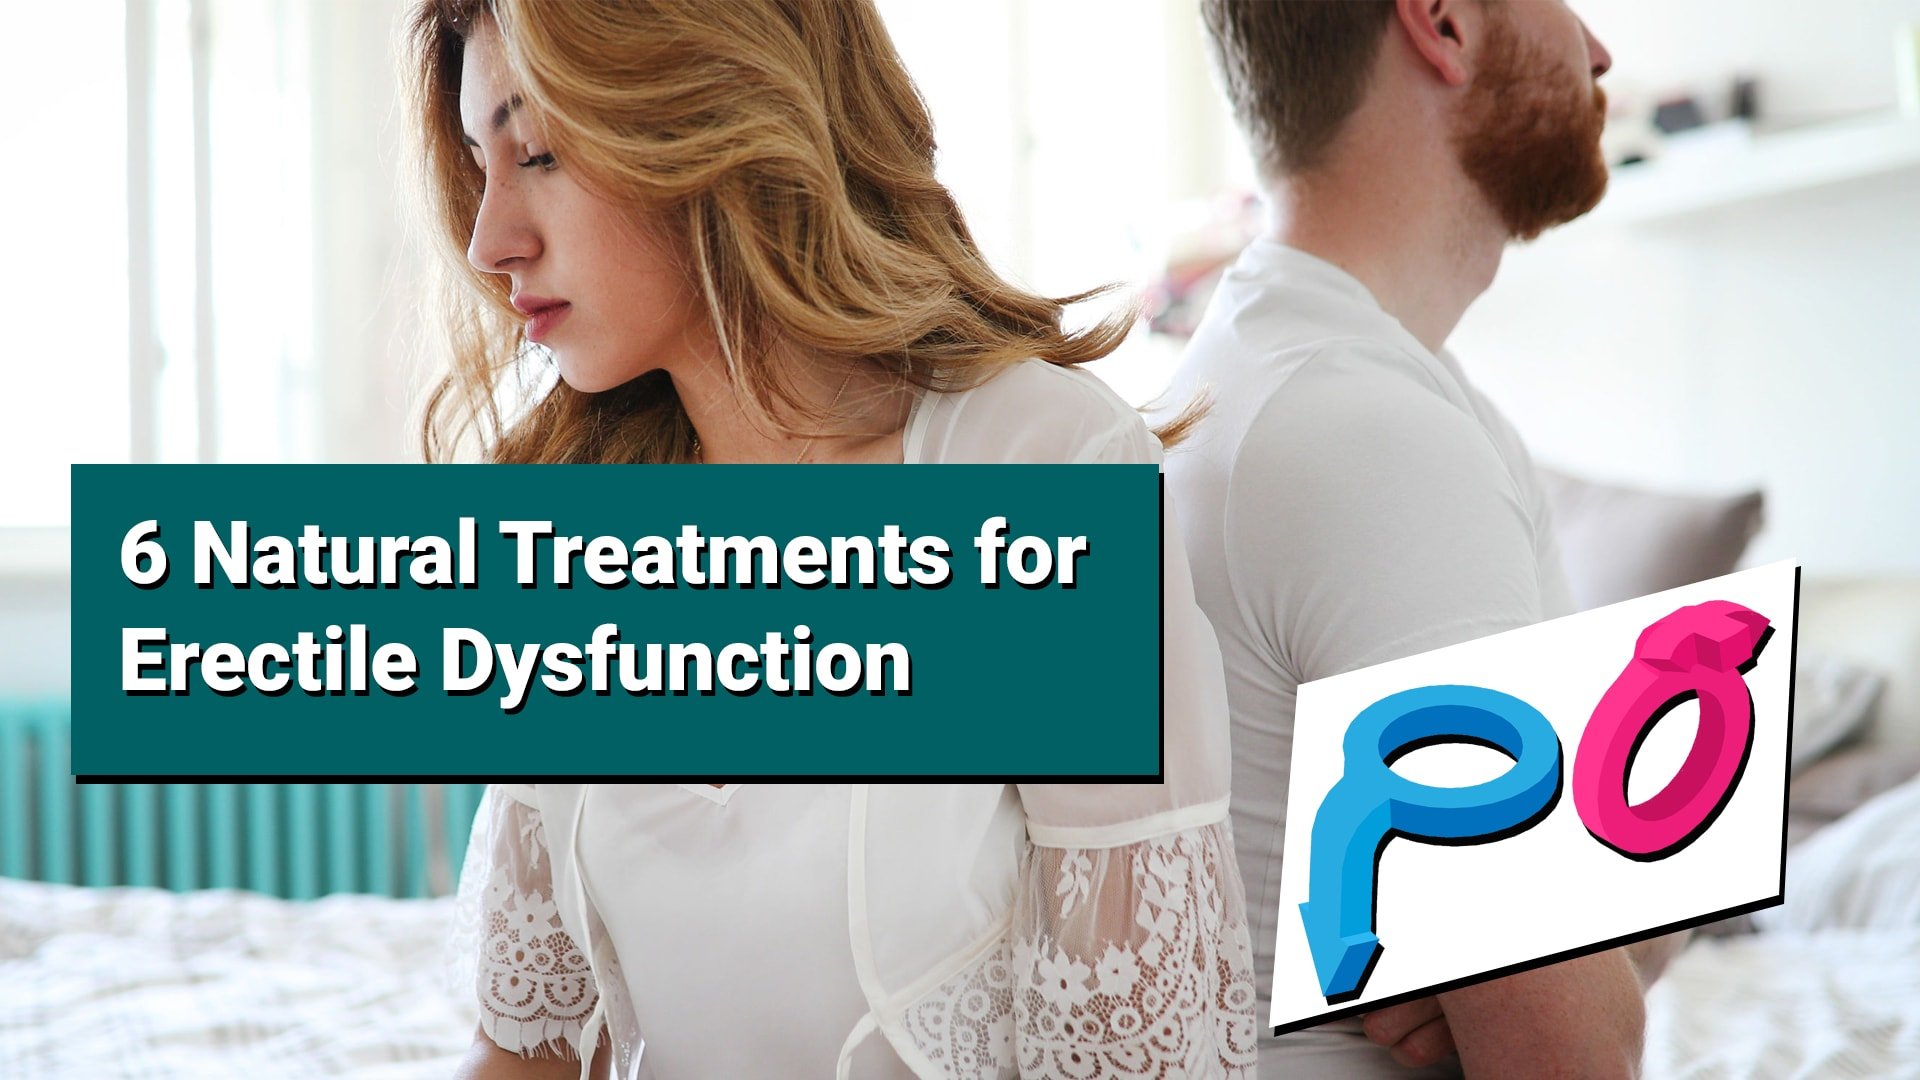 Treatments for erectile dysfunction